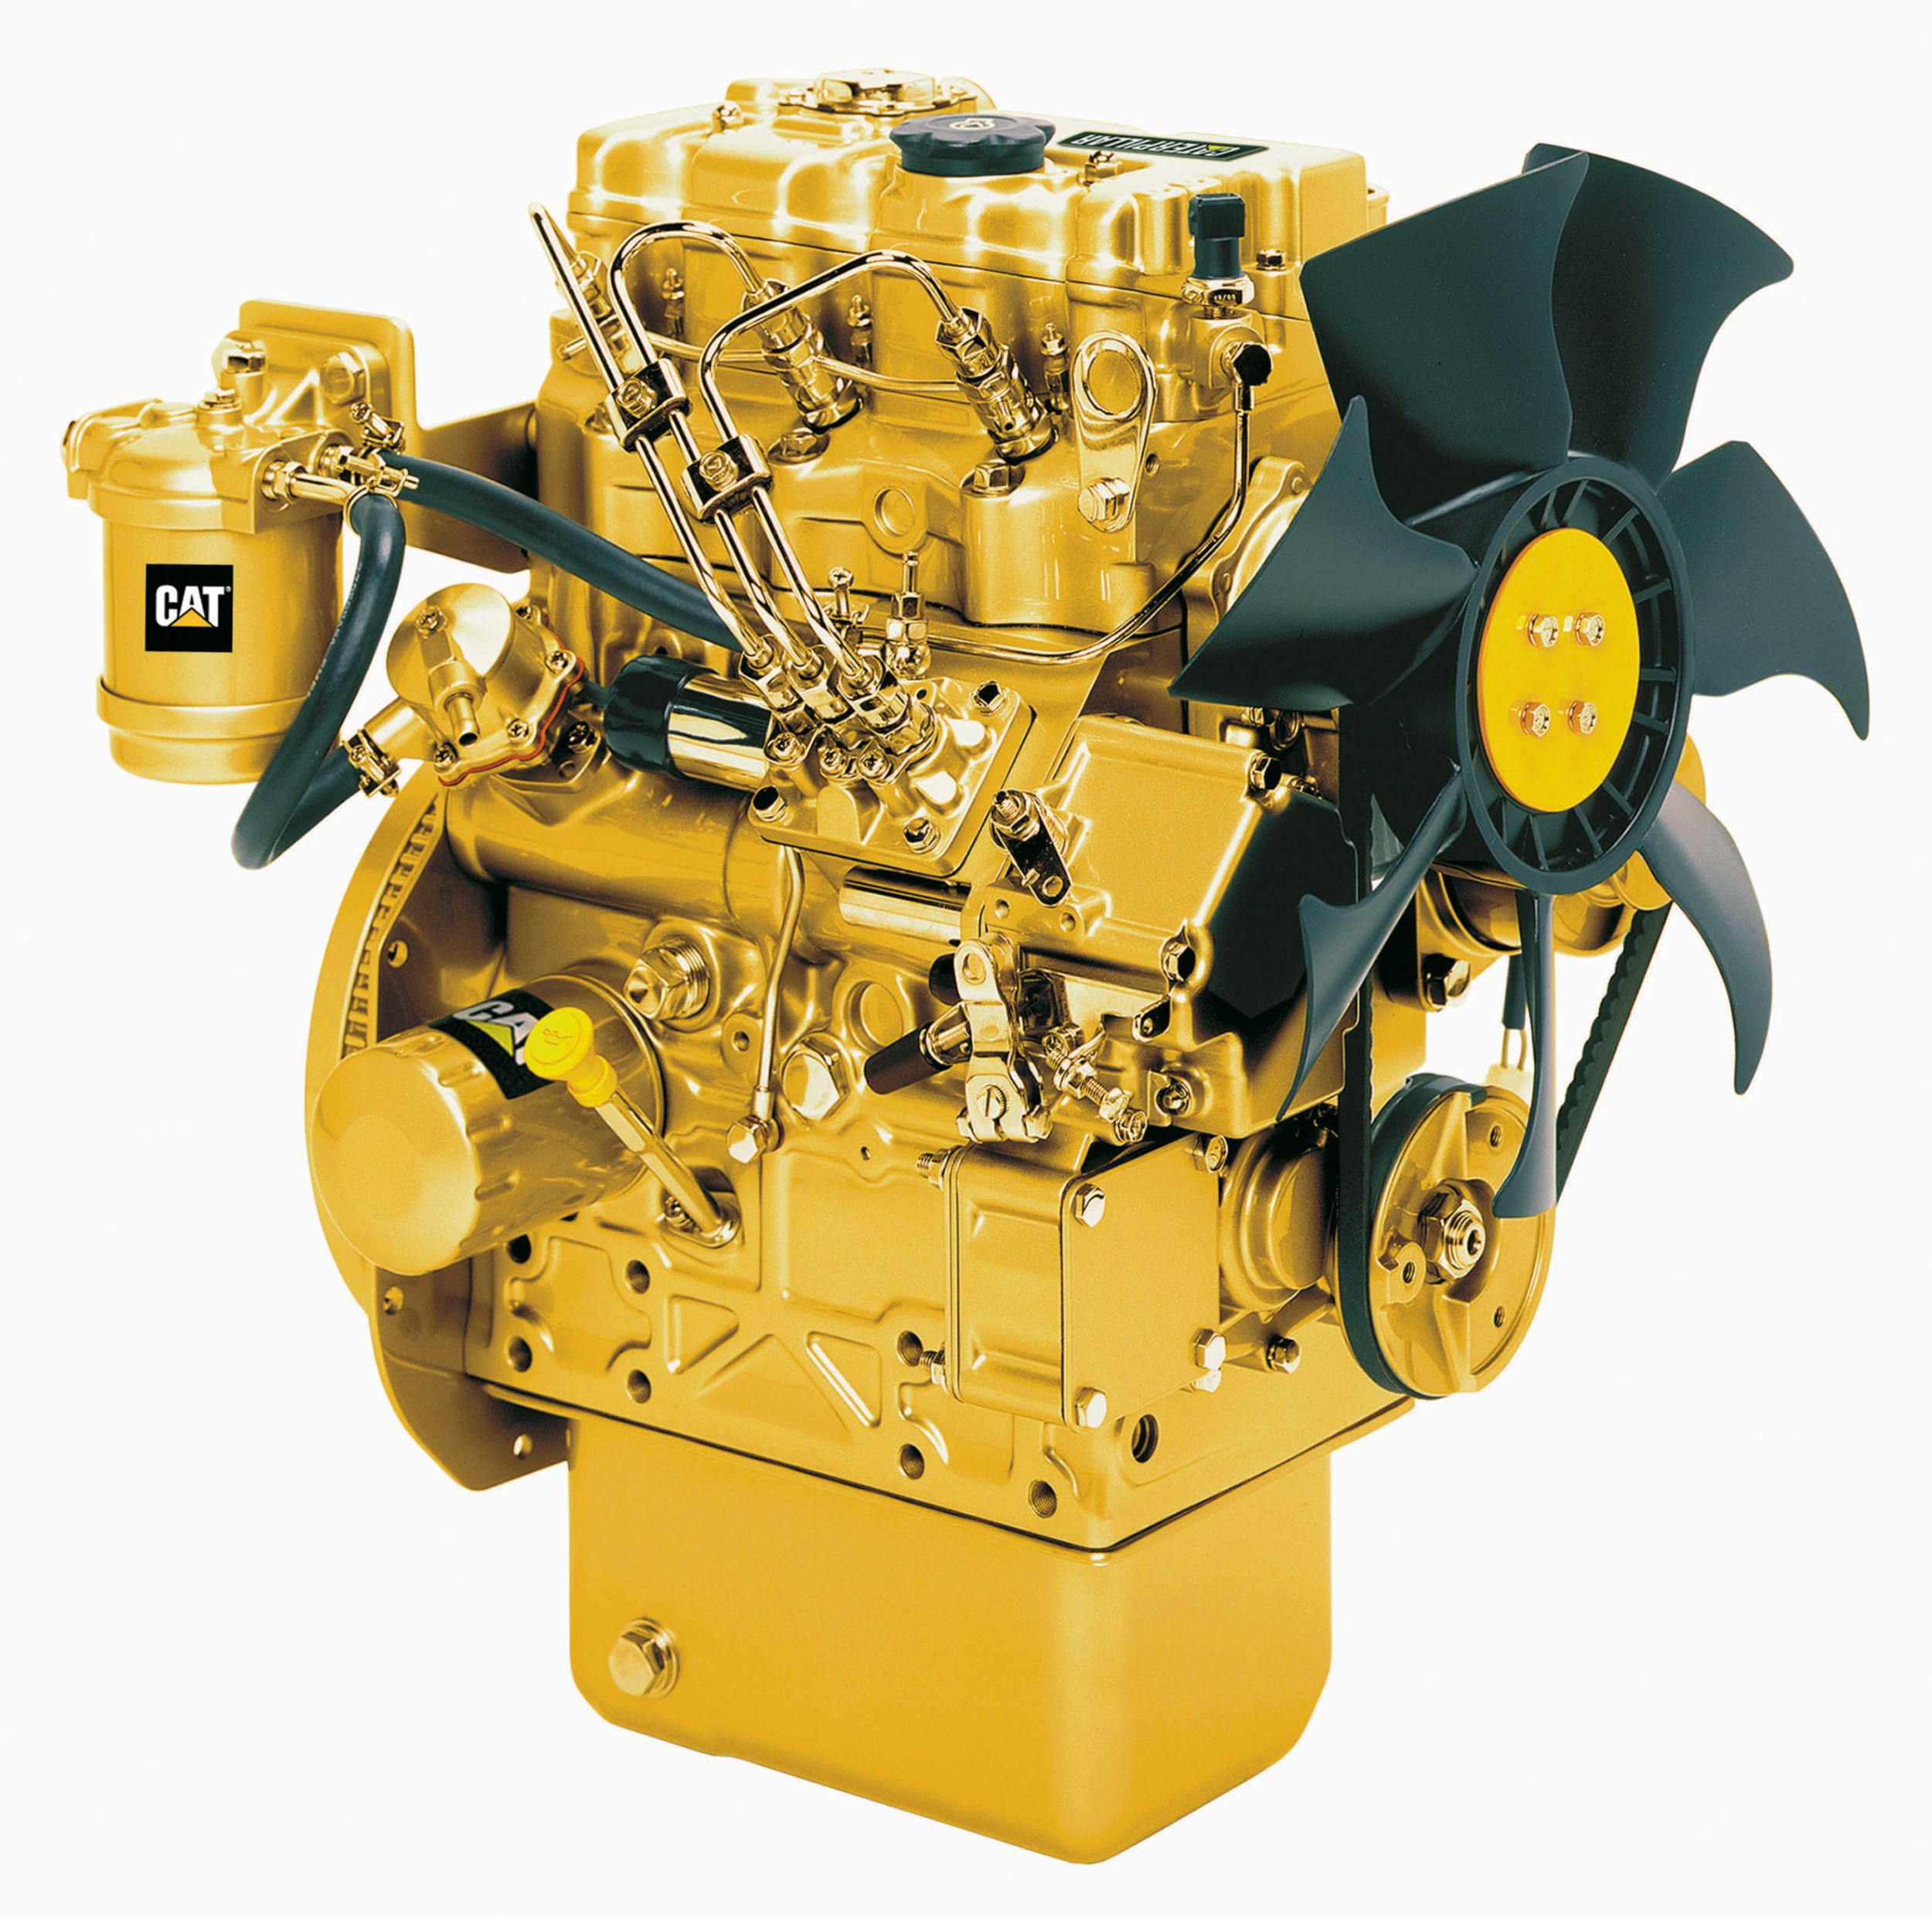 Cat<sup>®</sup> C1.1 Diesel Engine